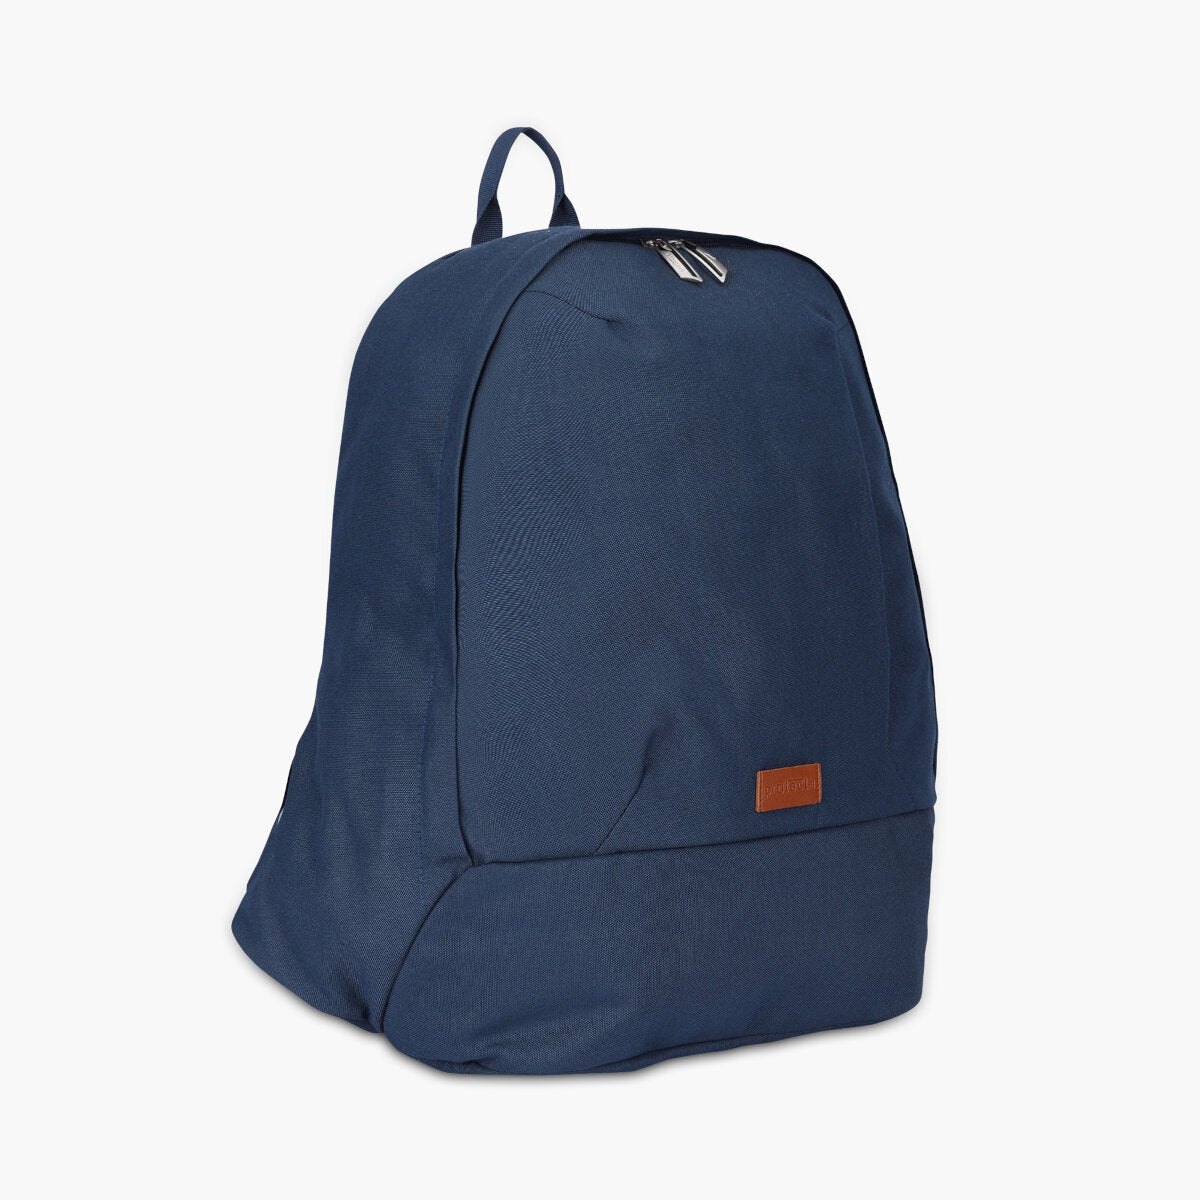 Blue | Protecta Steady Progress Laptop Backpack - 4